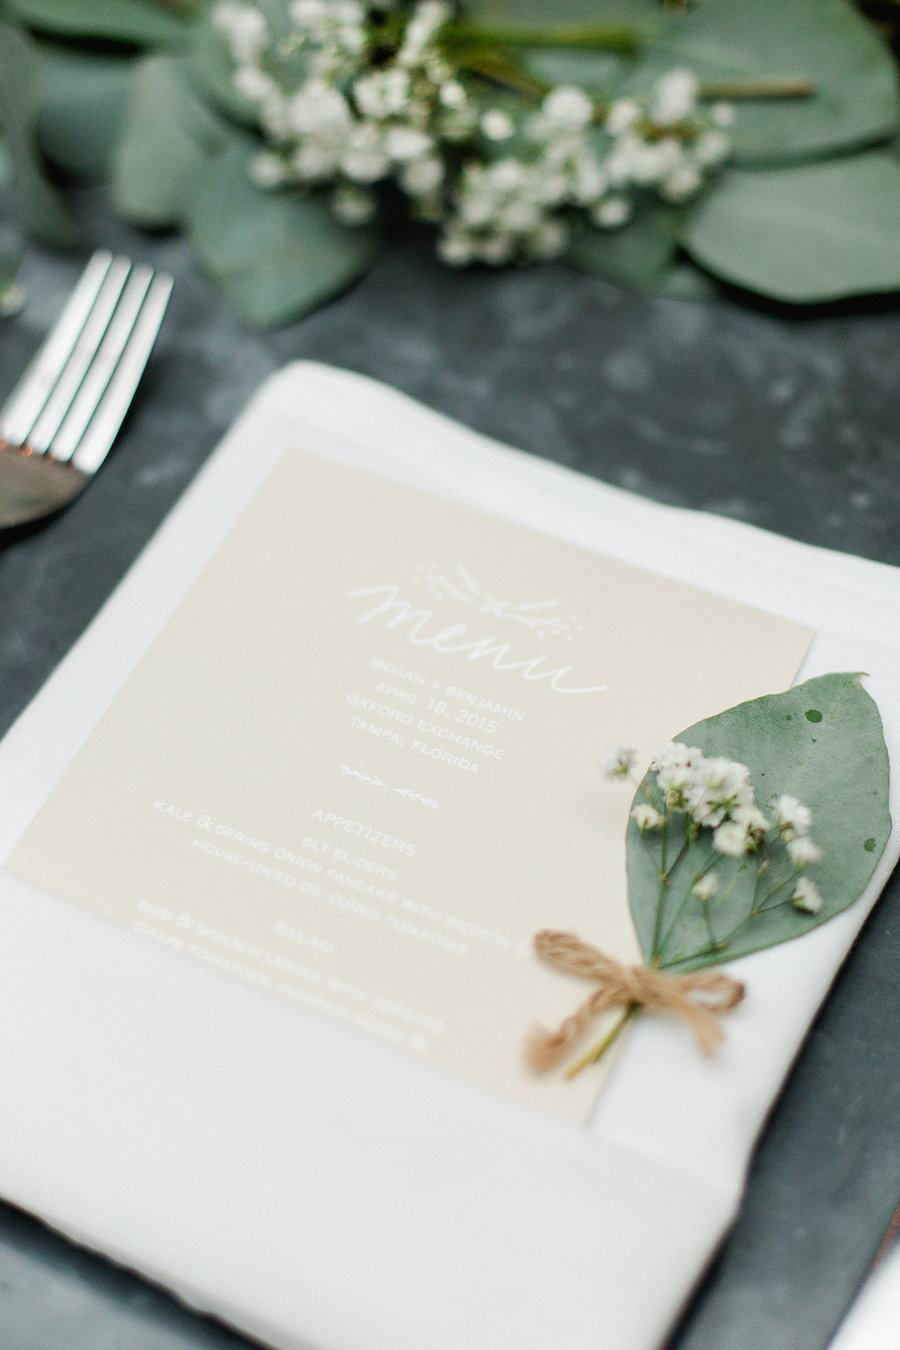 Neutral, Taupe/Tan Wedding Reception Menu with Greenery | Garden Inspired Wedding